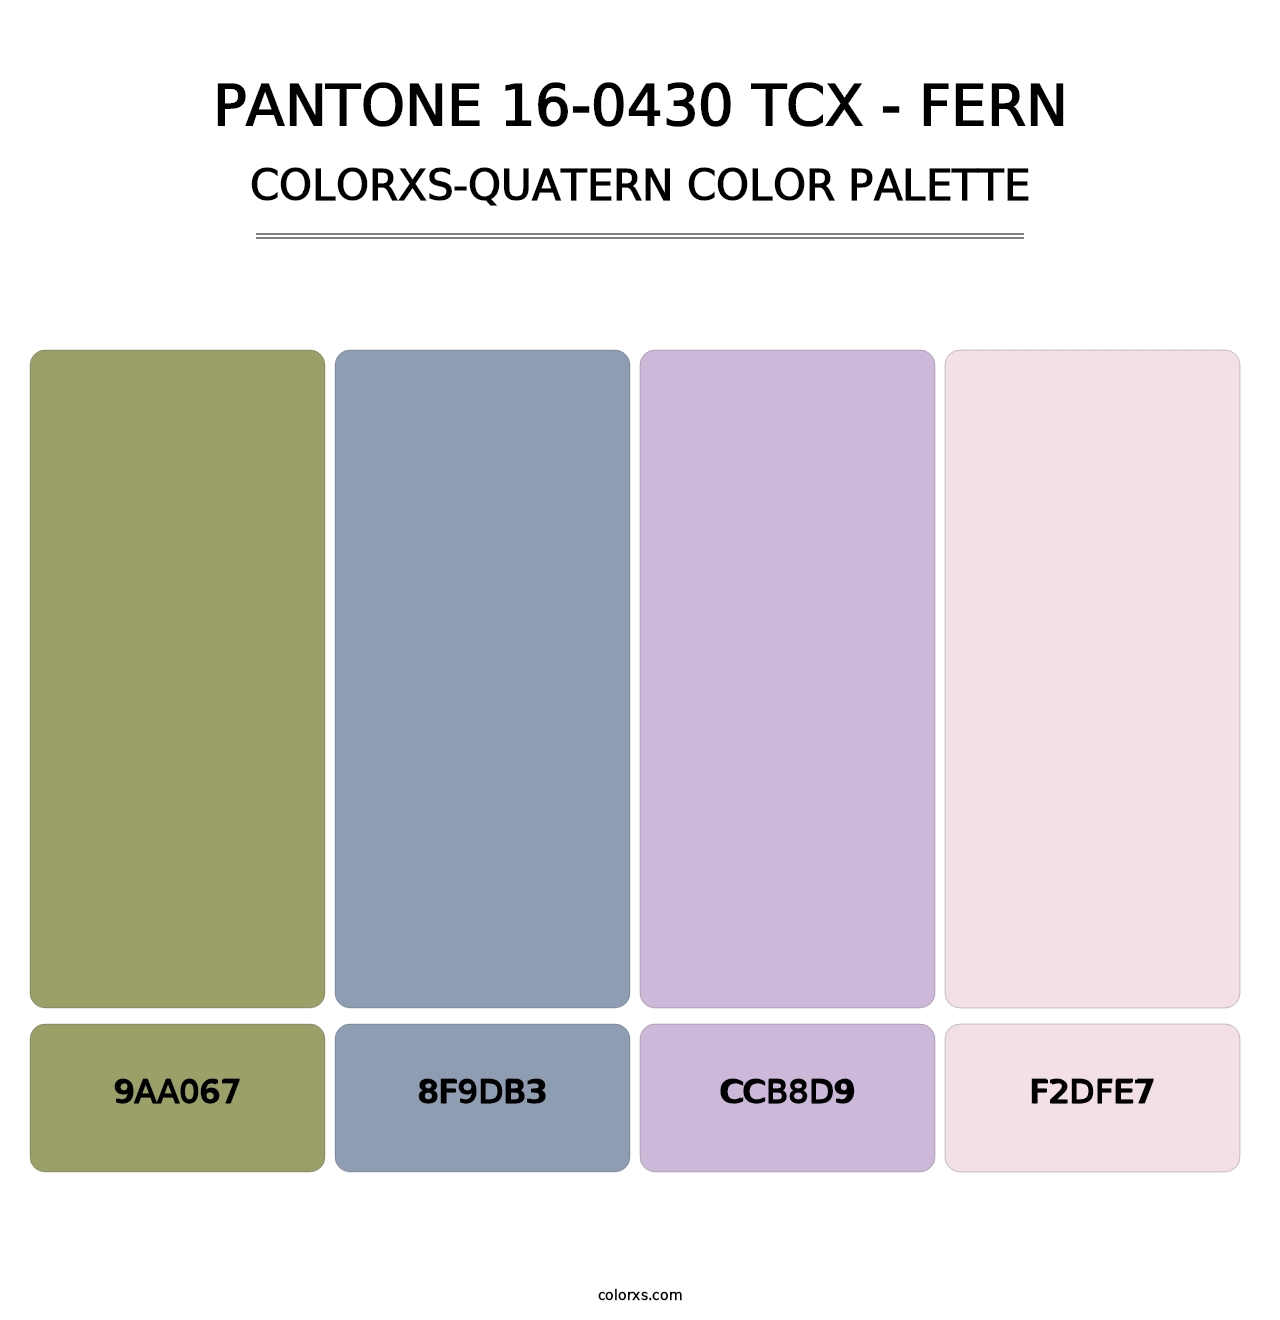 PANTONE 16-0430 TCX - Fern - Colorxs Quatern Palette